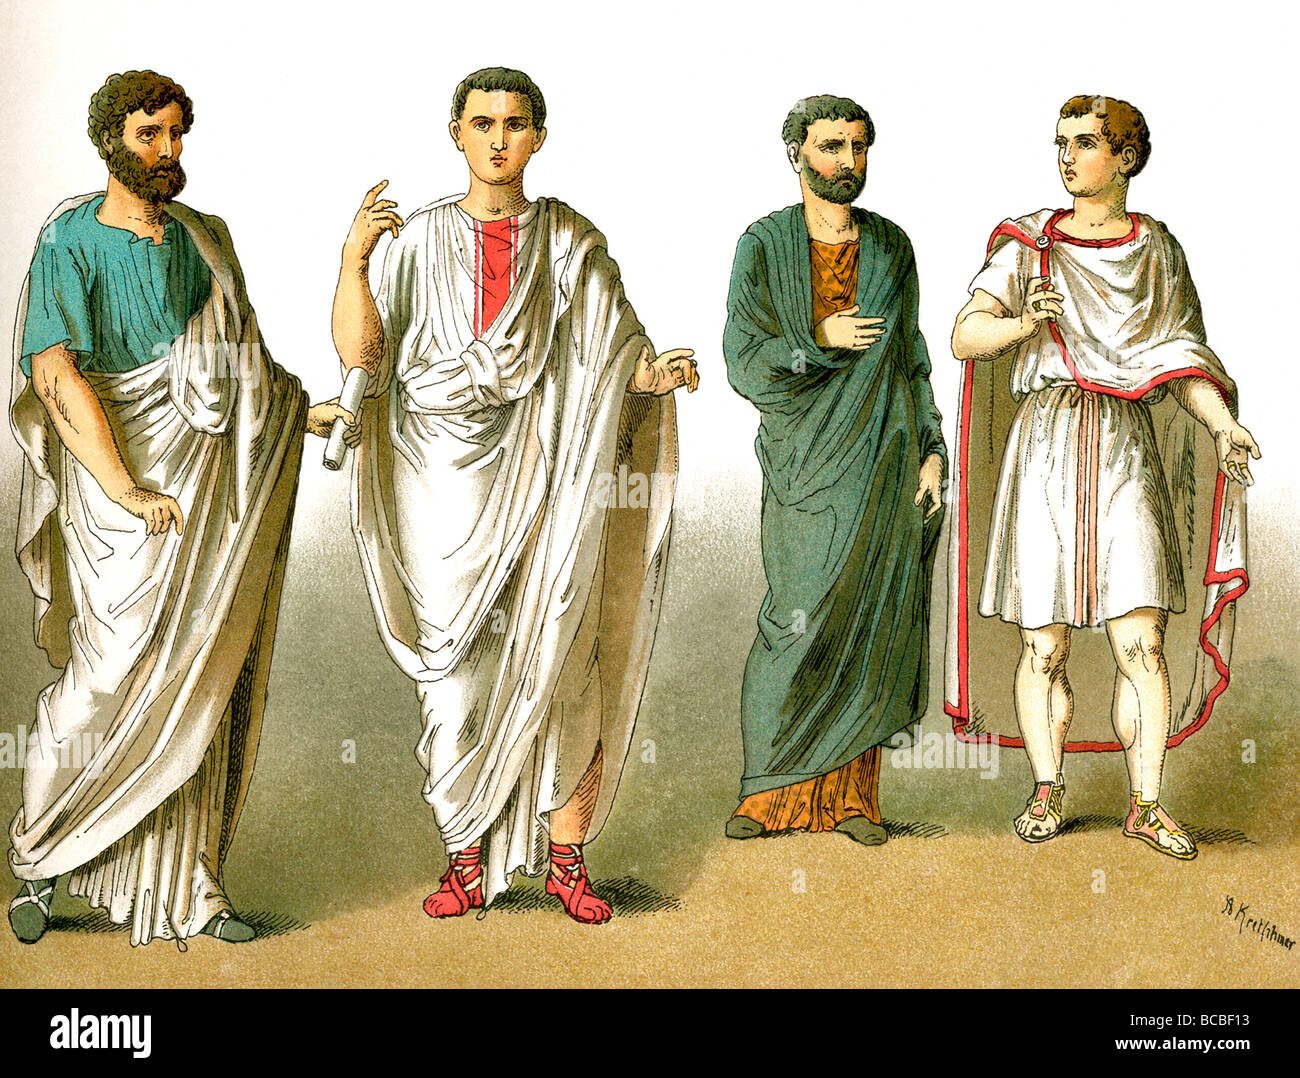 The figures represent a Roman public orator, a senator, a citizen of ...